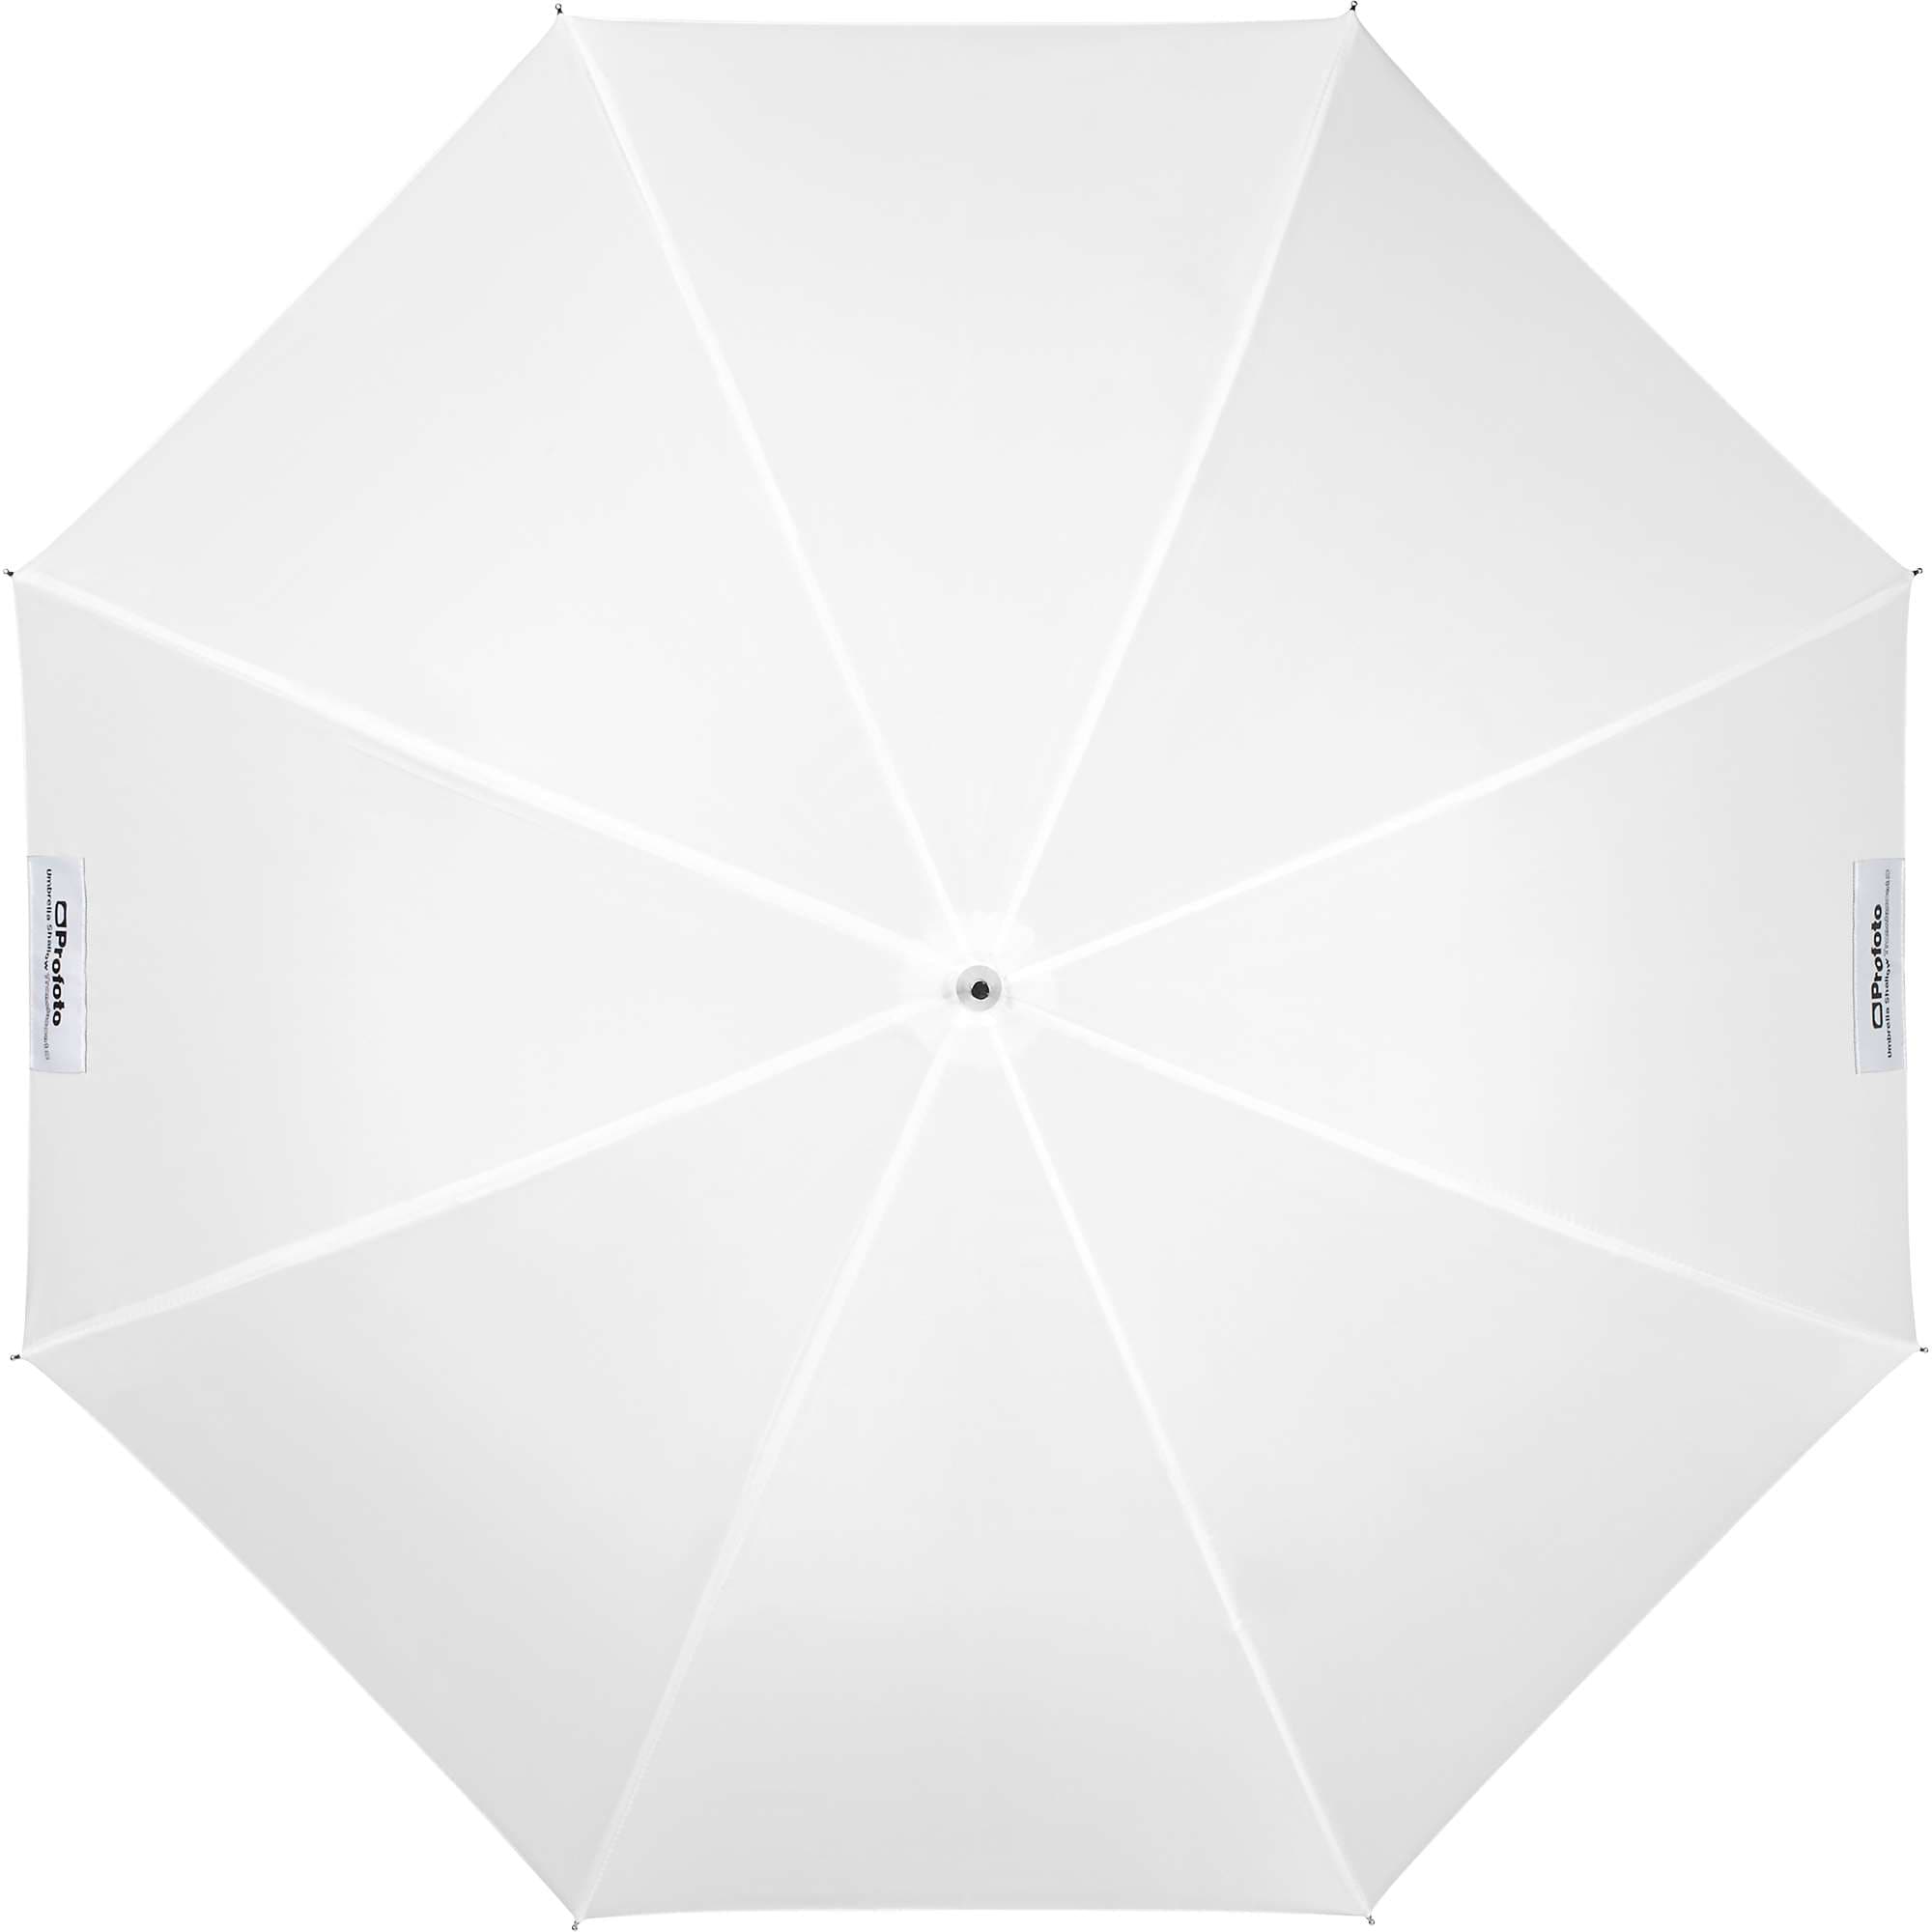 Profoto Umbrella Shallow Translucent S